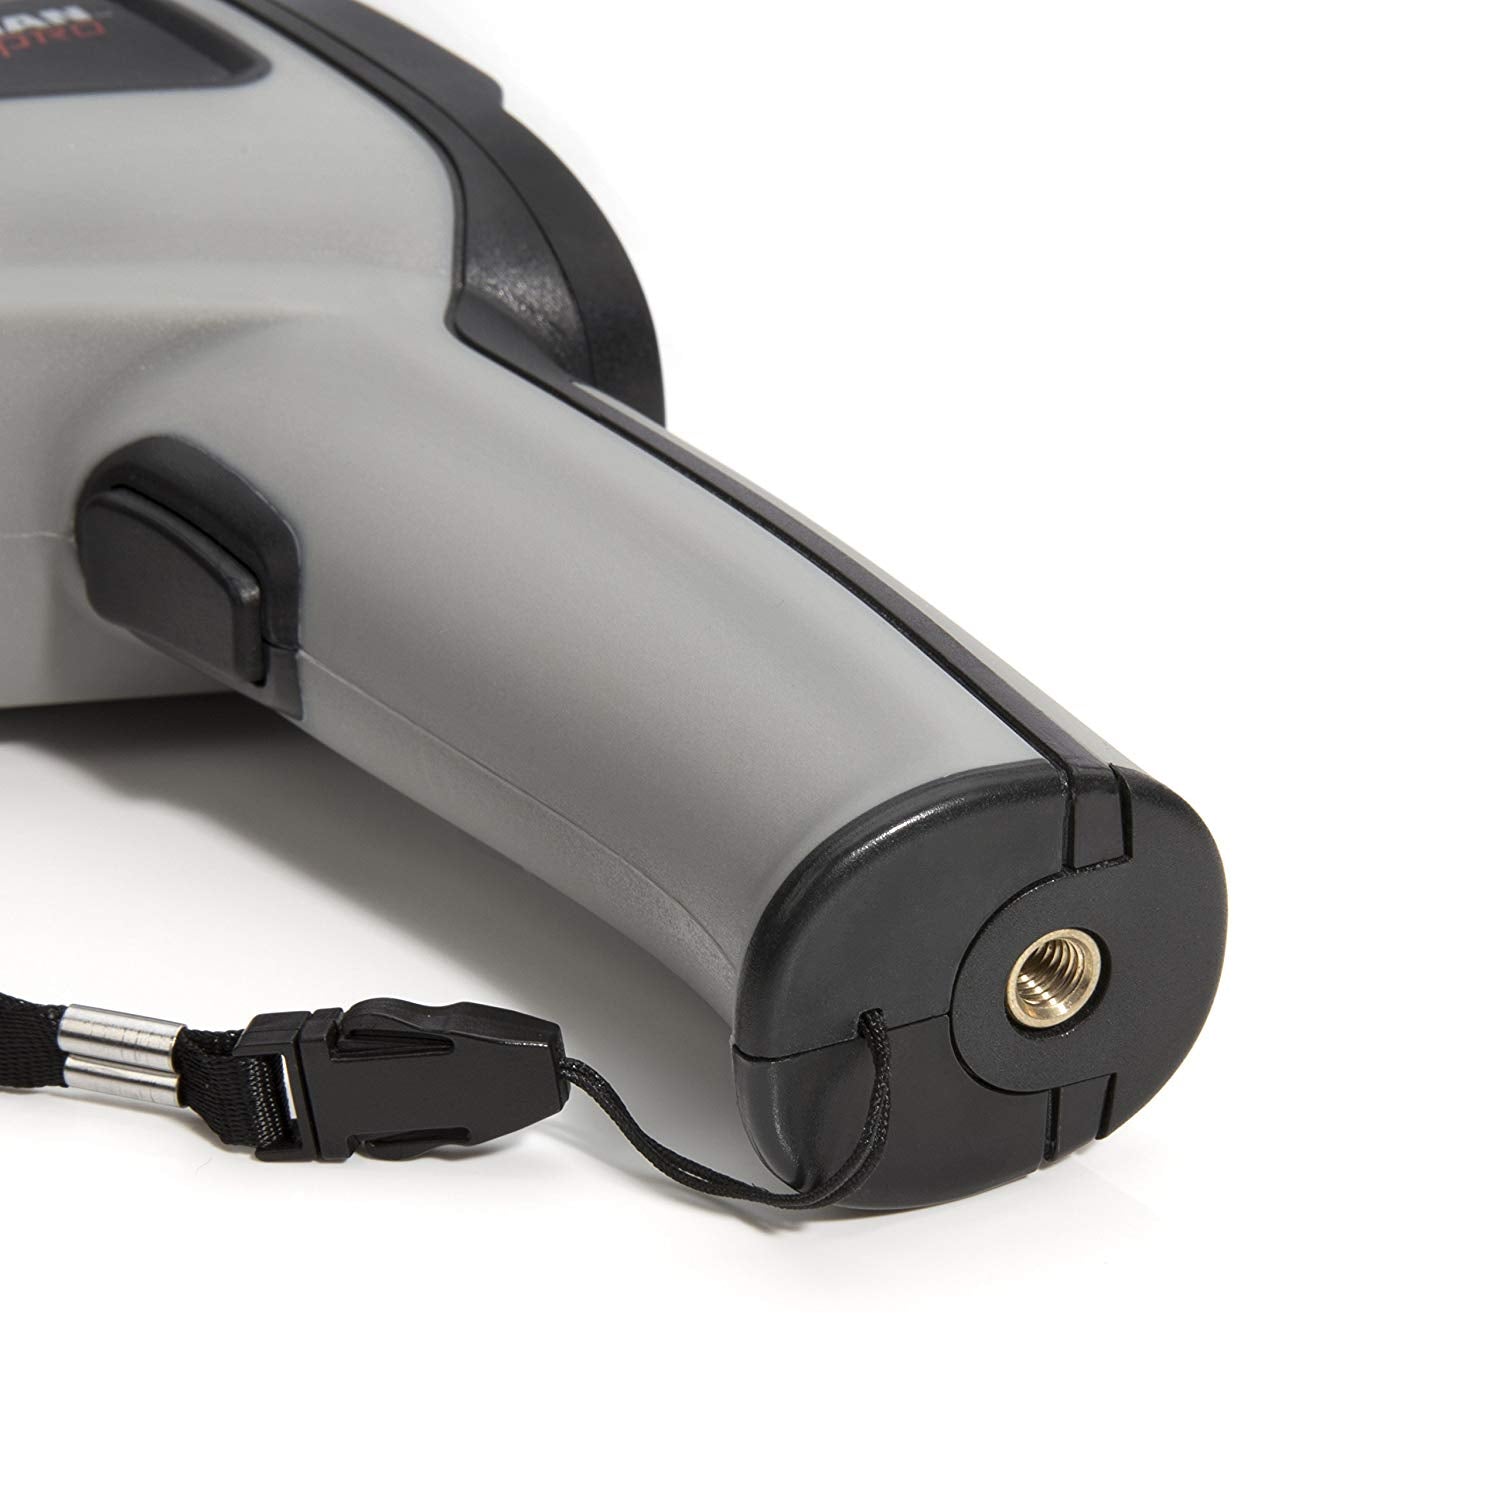 STEELMAN PRO STI-241 (79041) Thermal Imaging Inspection Camera - MPR Tools & Equipment